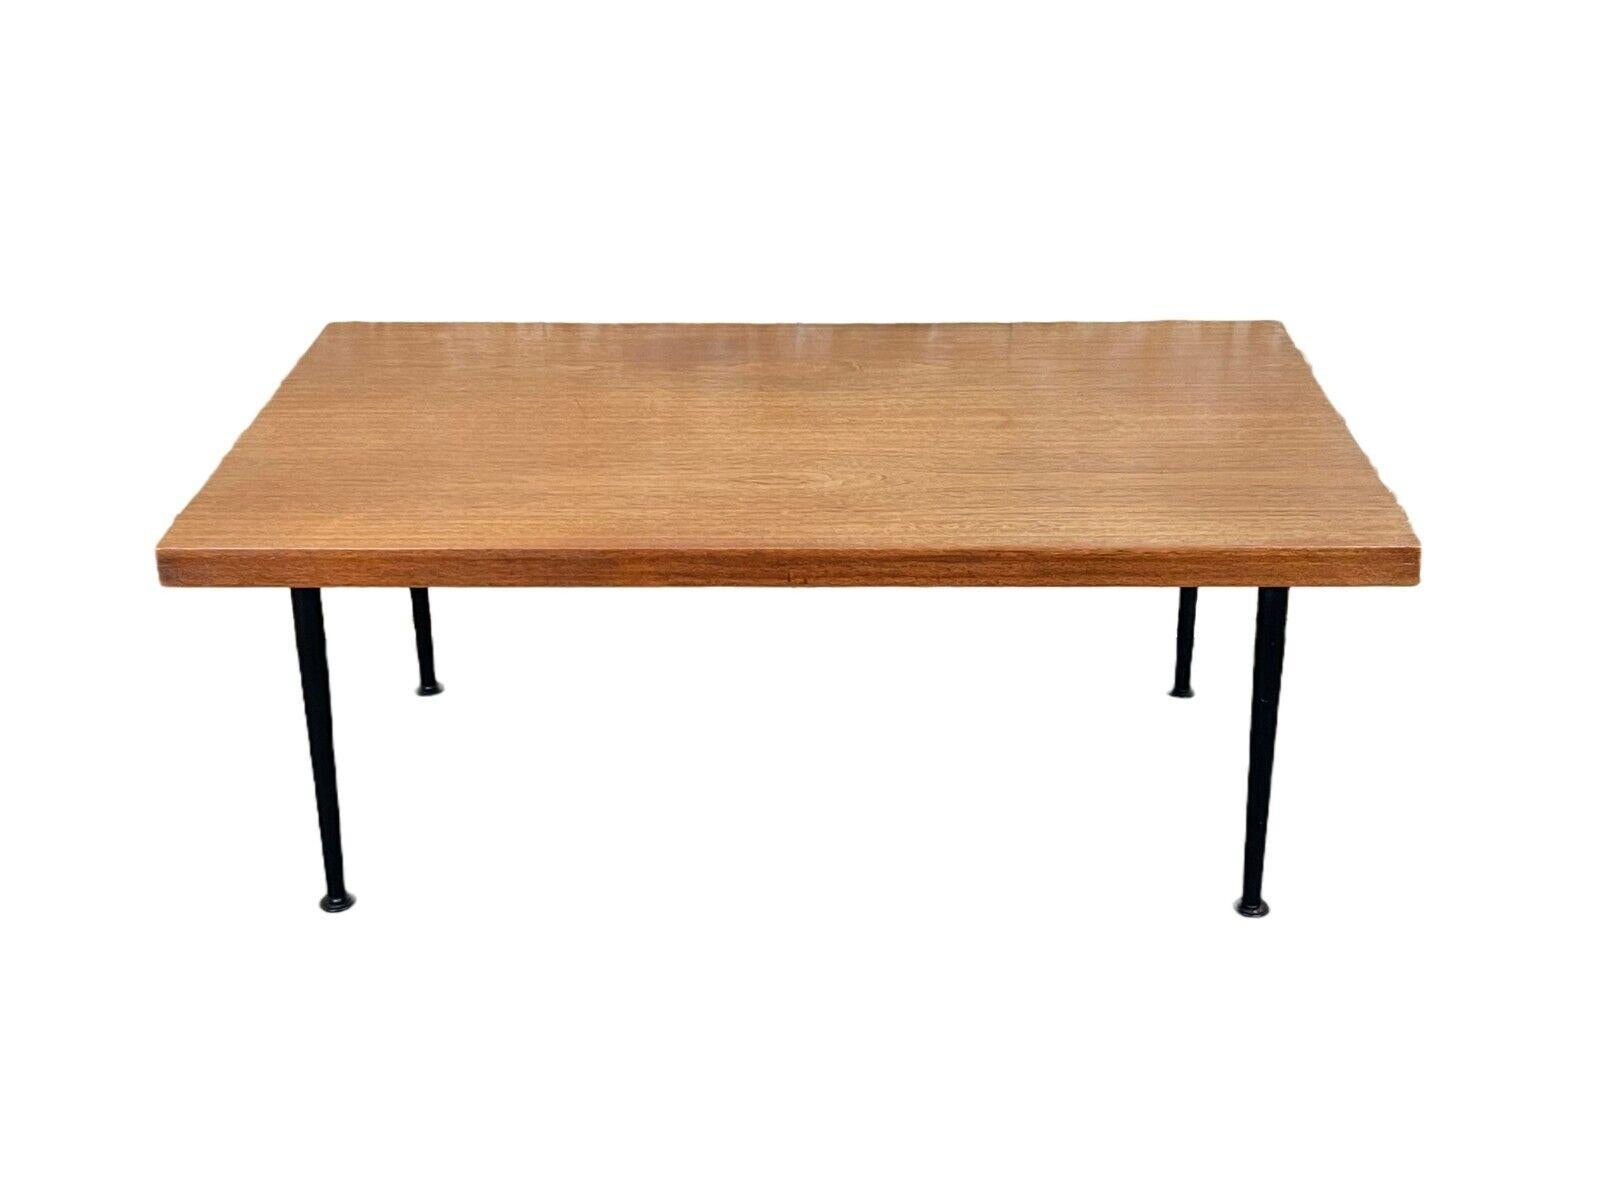 1960s-1970s teak coffee table side table Ilse Möbel Danish Modern Design

Object: coffee table

Manufacturer: Ilse Möbel

Condition: good - vintage

Age: around 1960-1970

Dimensions:

Width = 124cm
Depth = 70cm
Height = 50cm

Other